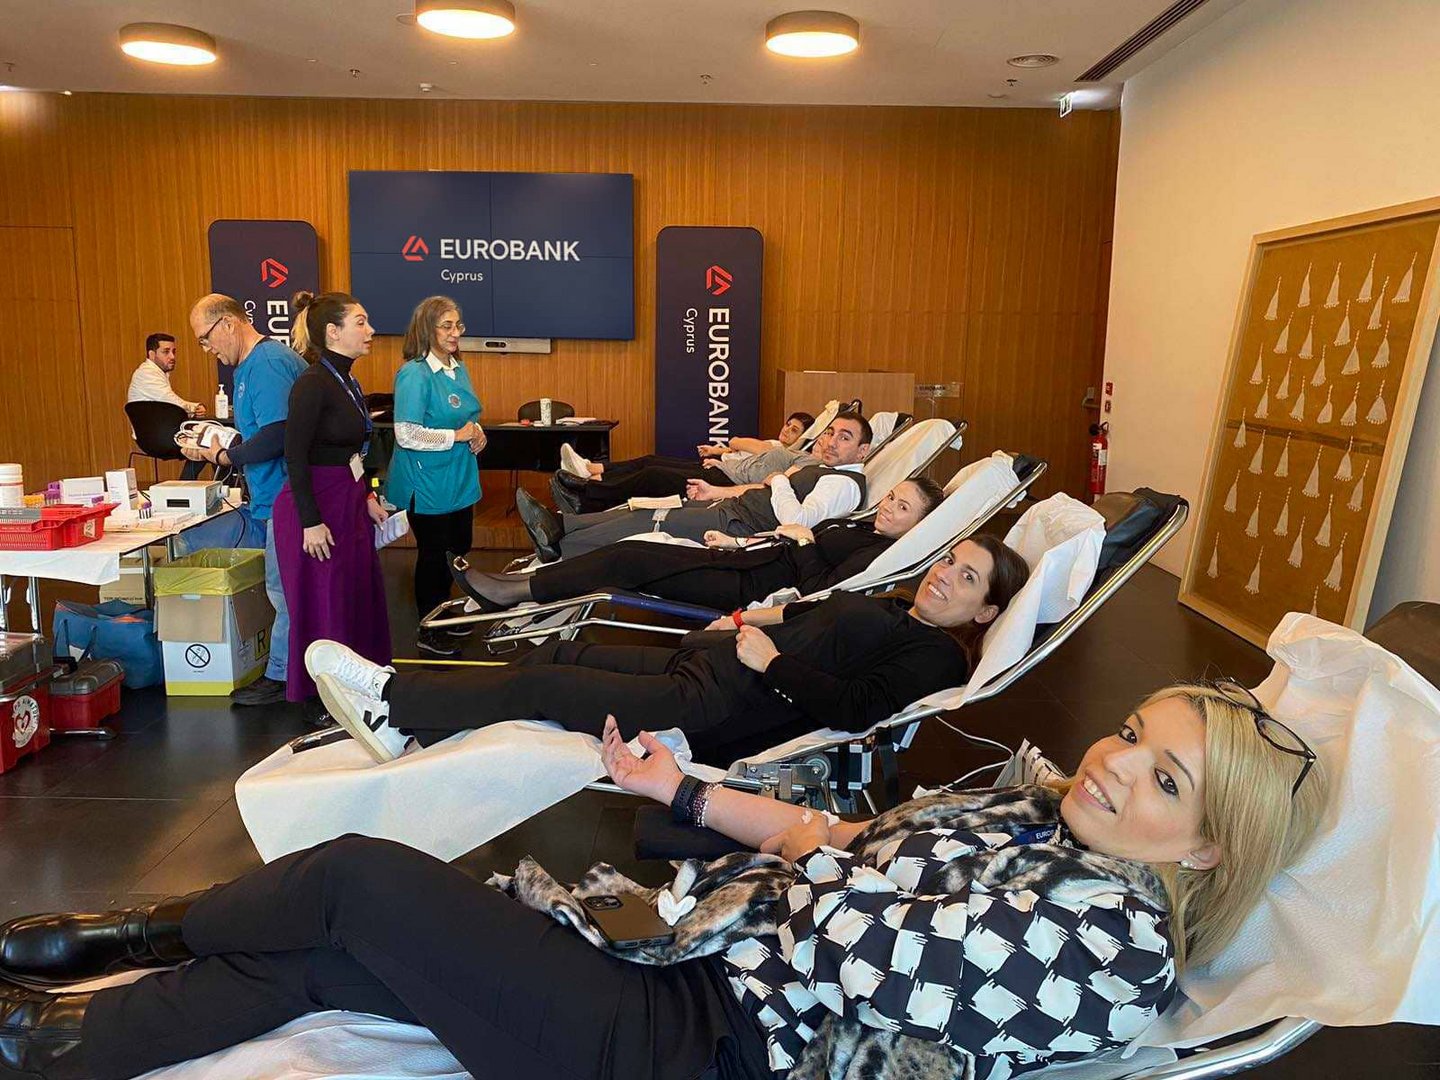 image Eurobank Cyprus hosts voluntary blood donation